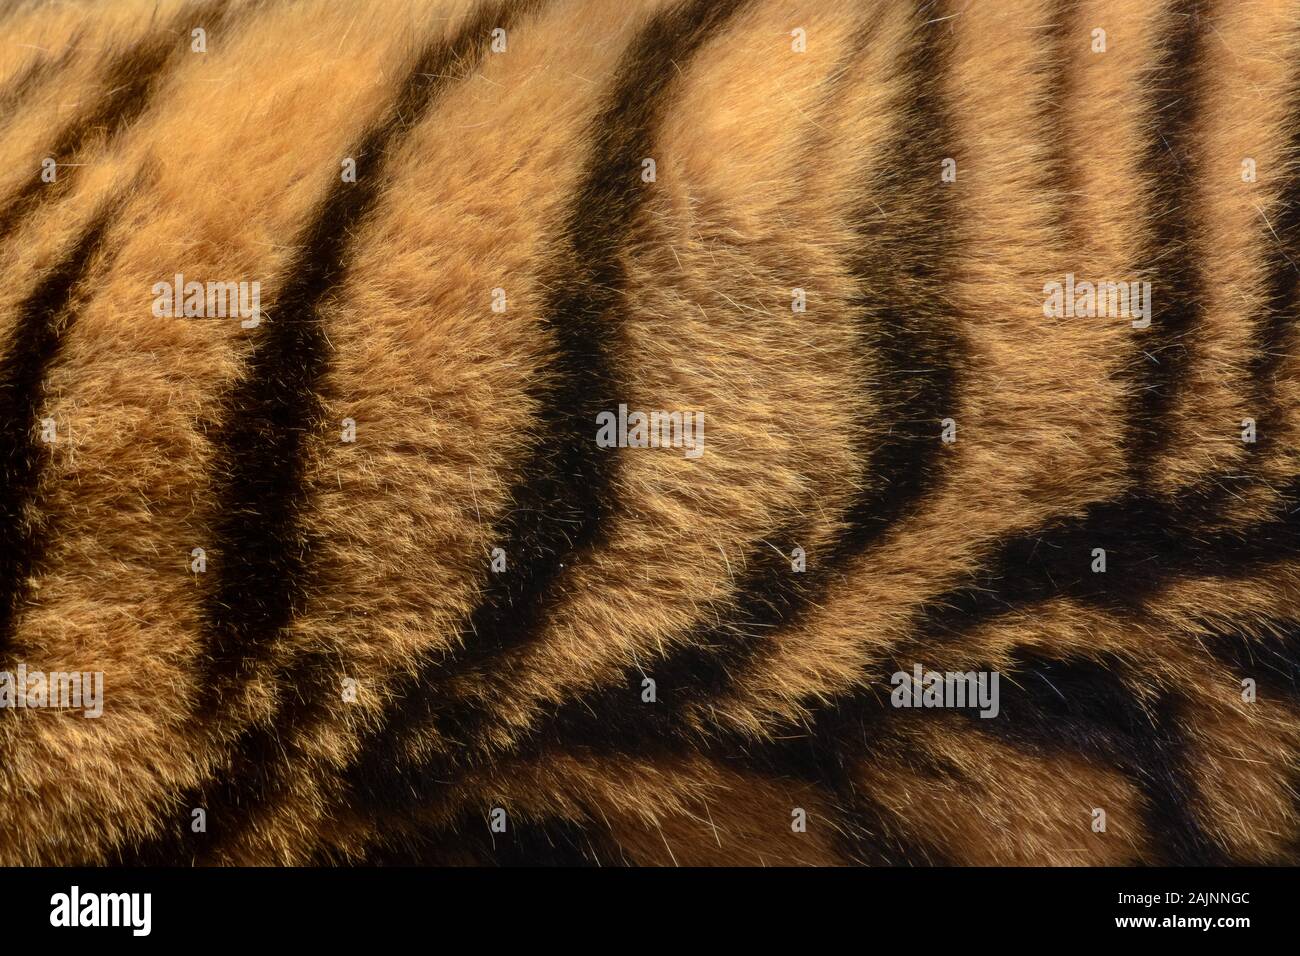 Orange and black striped tiger fur animal background pattern Stock Photo